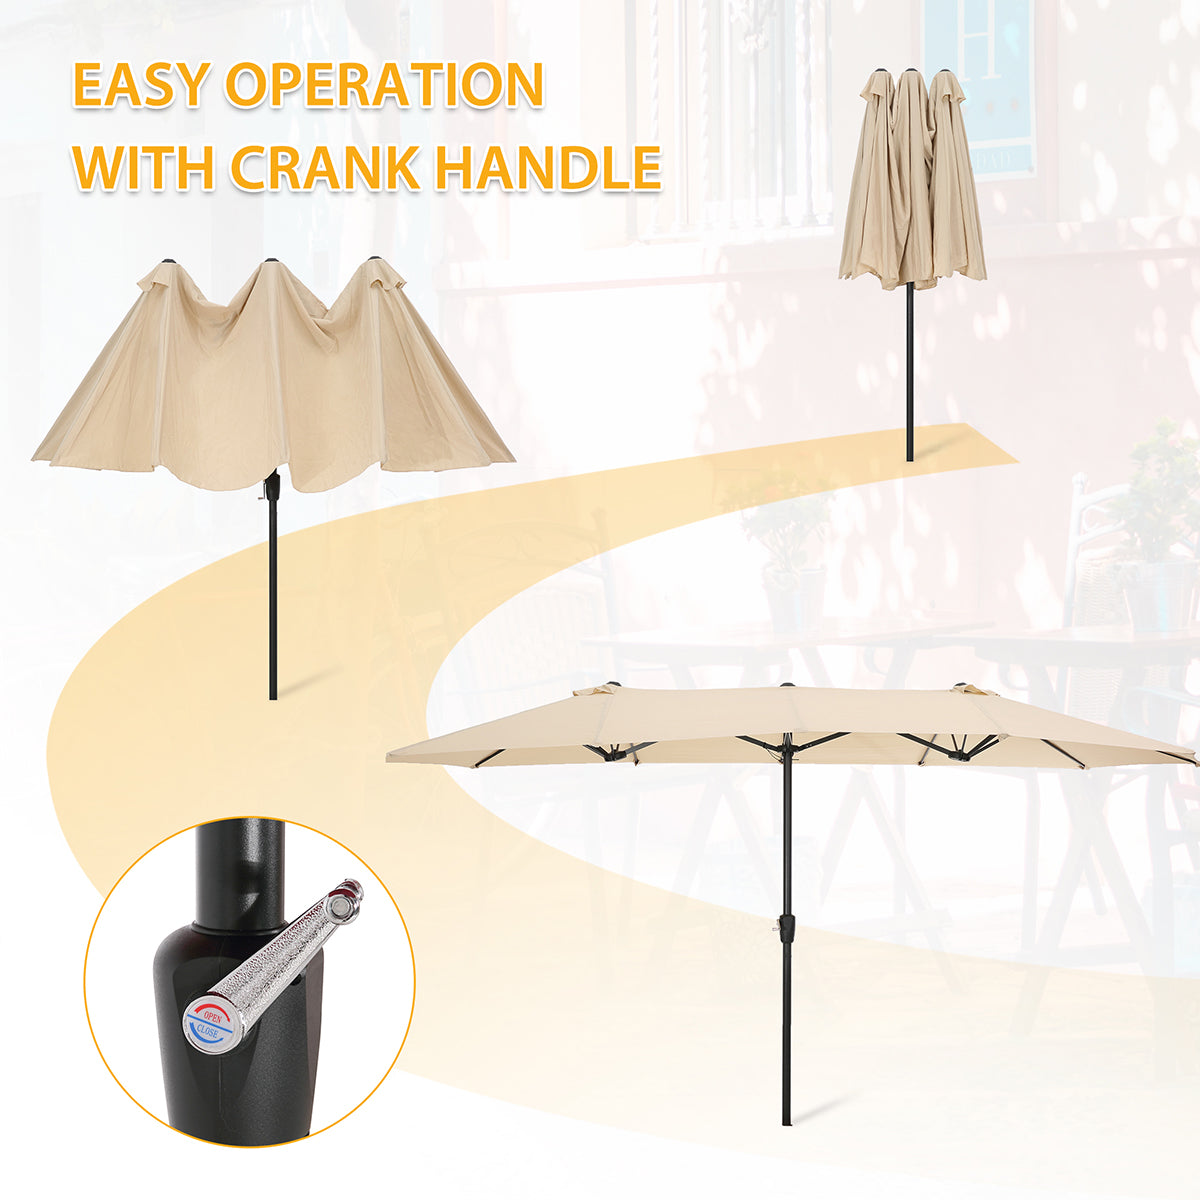 RaDEWAY 15x9ft Large Double-Sided Rectangular Outdoor Twin Patio Market Umbrella